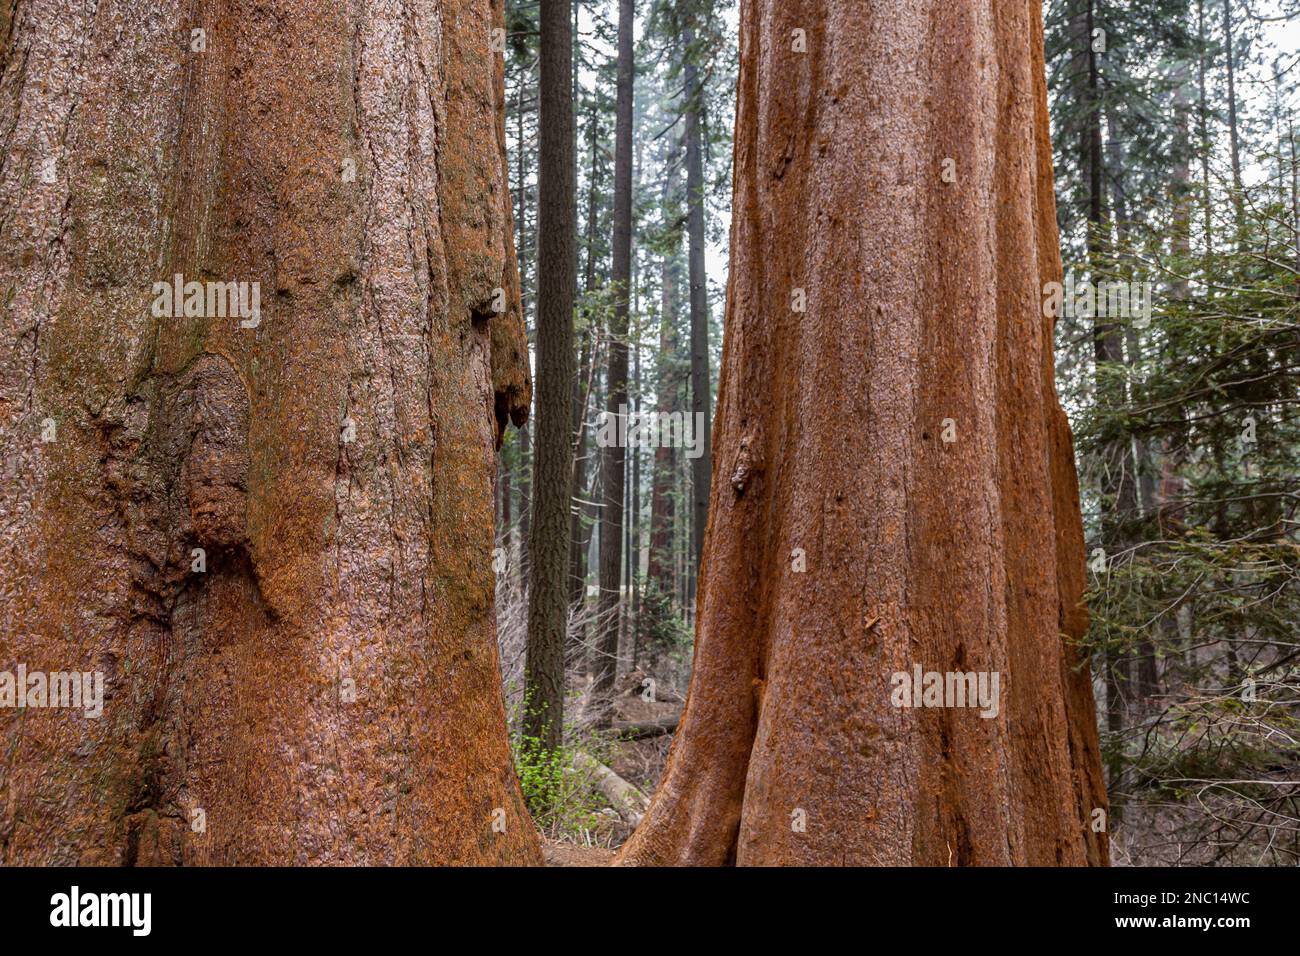 Sequoia trees in Yosemite National Park. Giant Sequoia Tree in Sequoia National Park, California, Sequoia tree. Stock Photo